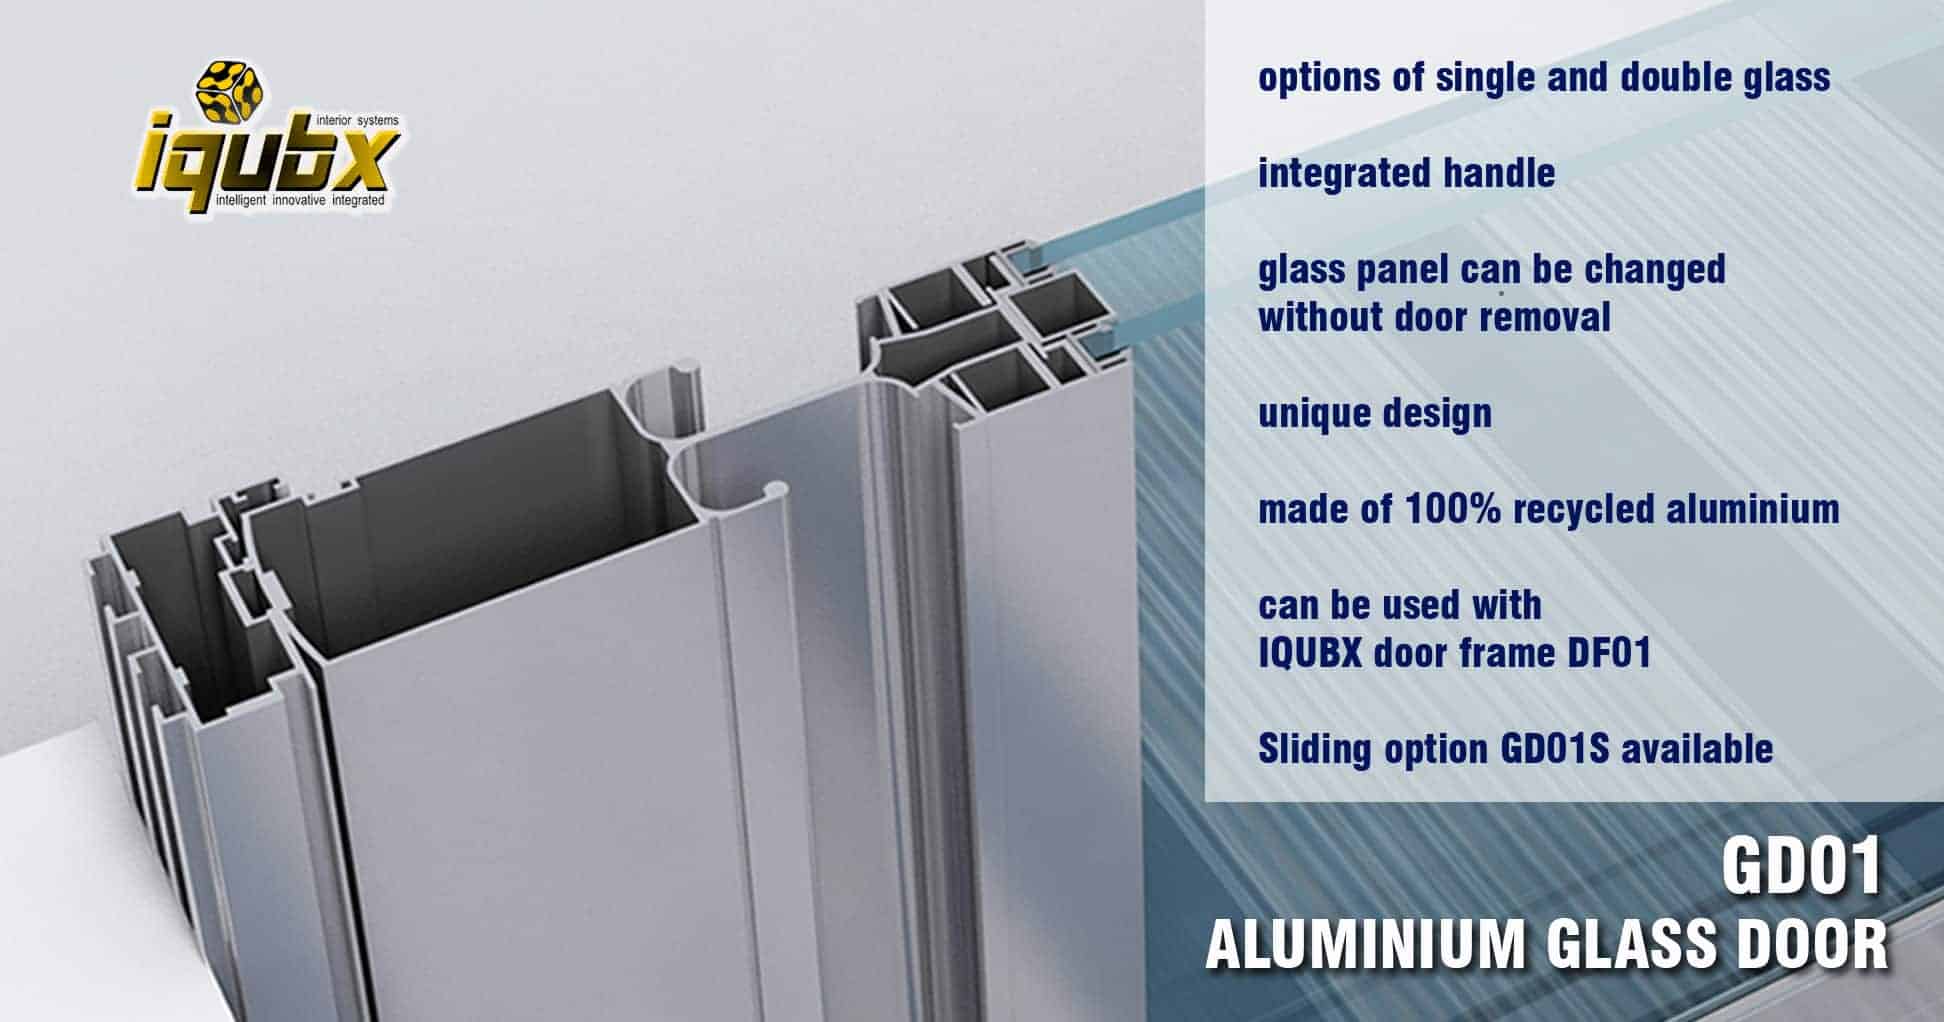 IQUBX aluminum glass door detail